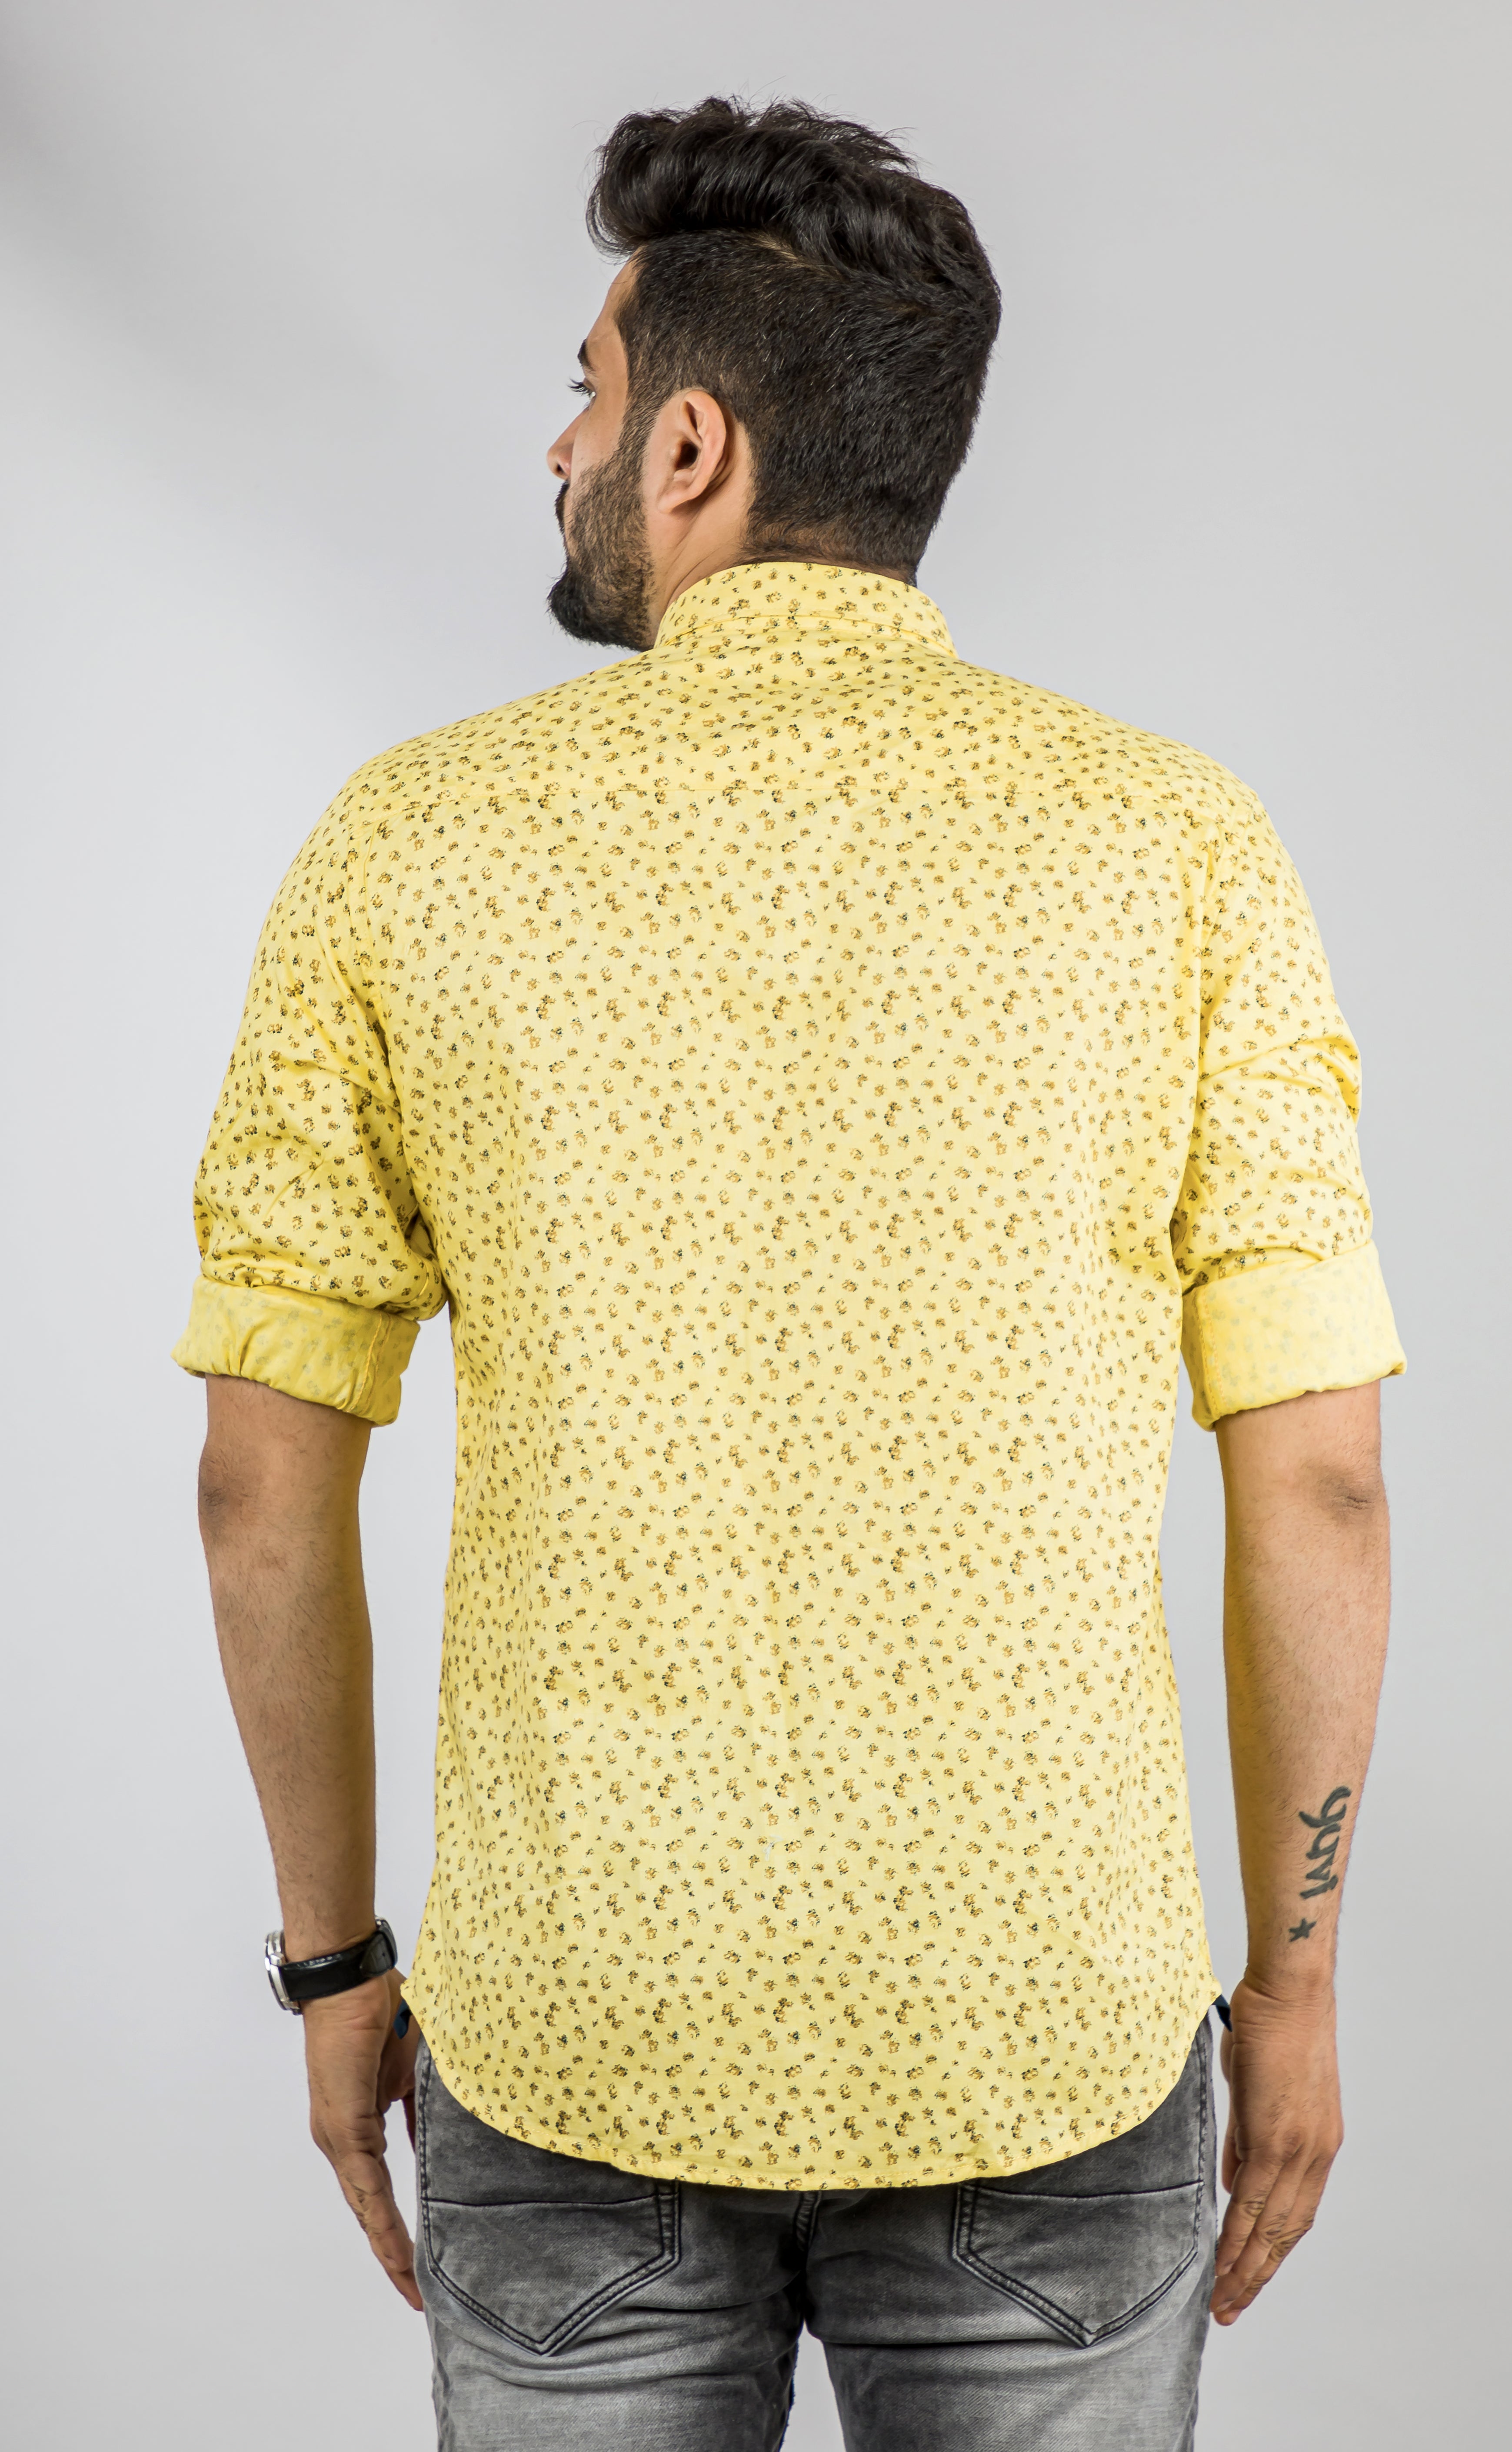 Men's Corn Yellow Printed Shirt